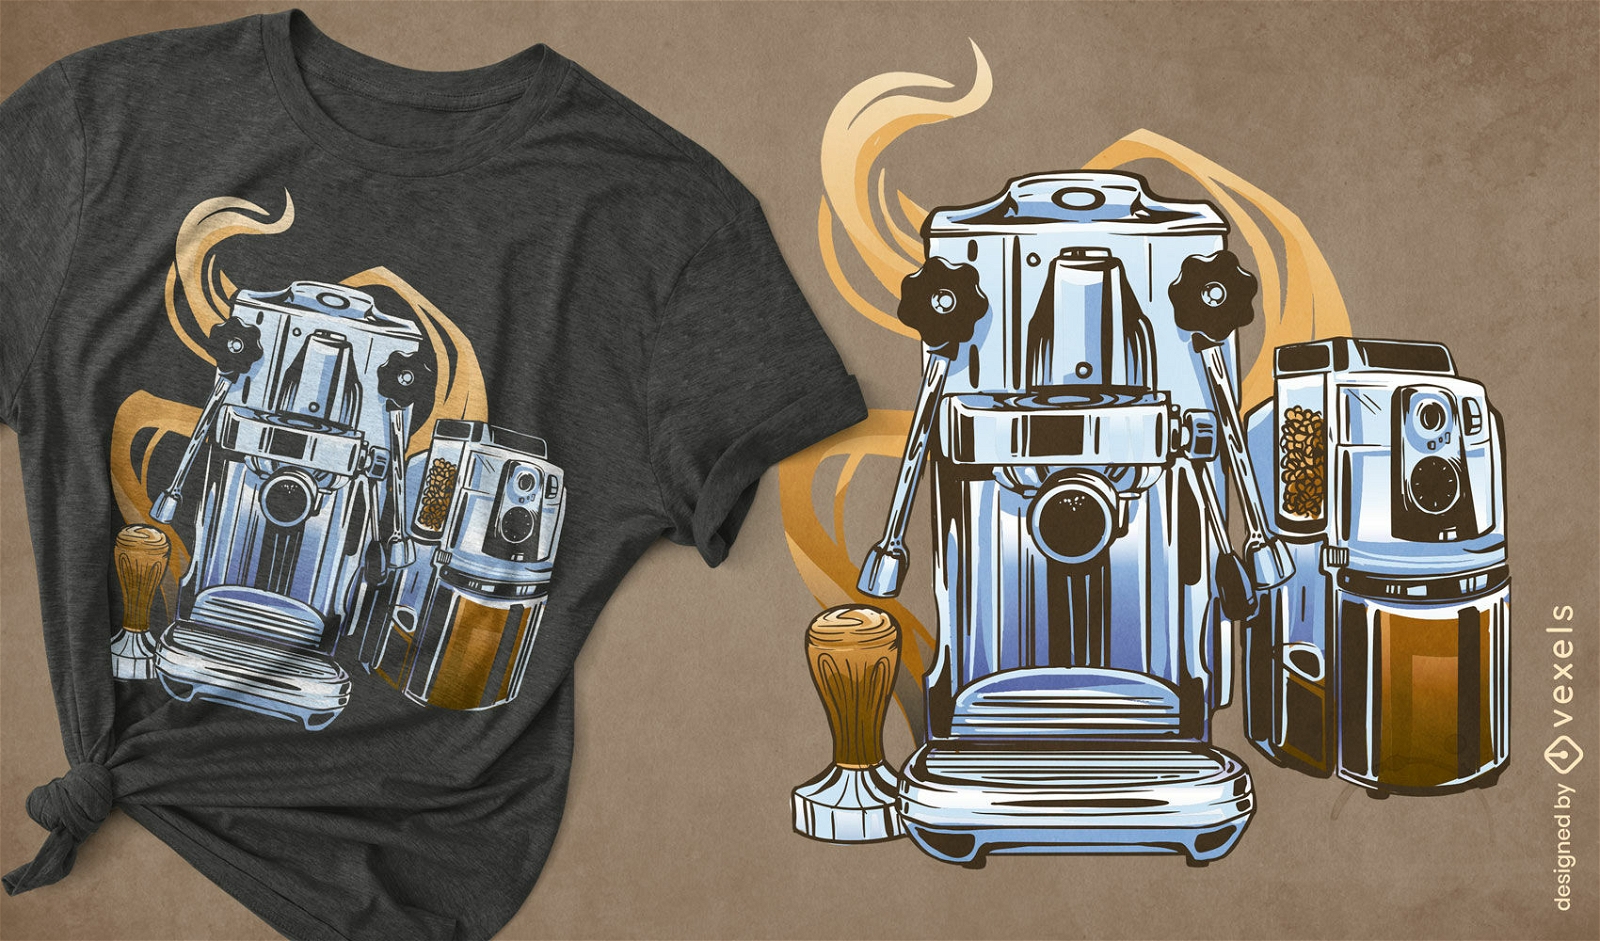 Diseño de camiseta de máquina de café espresso.